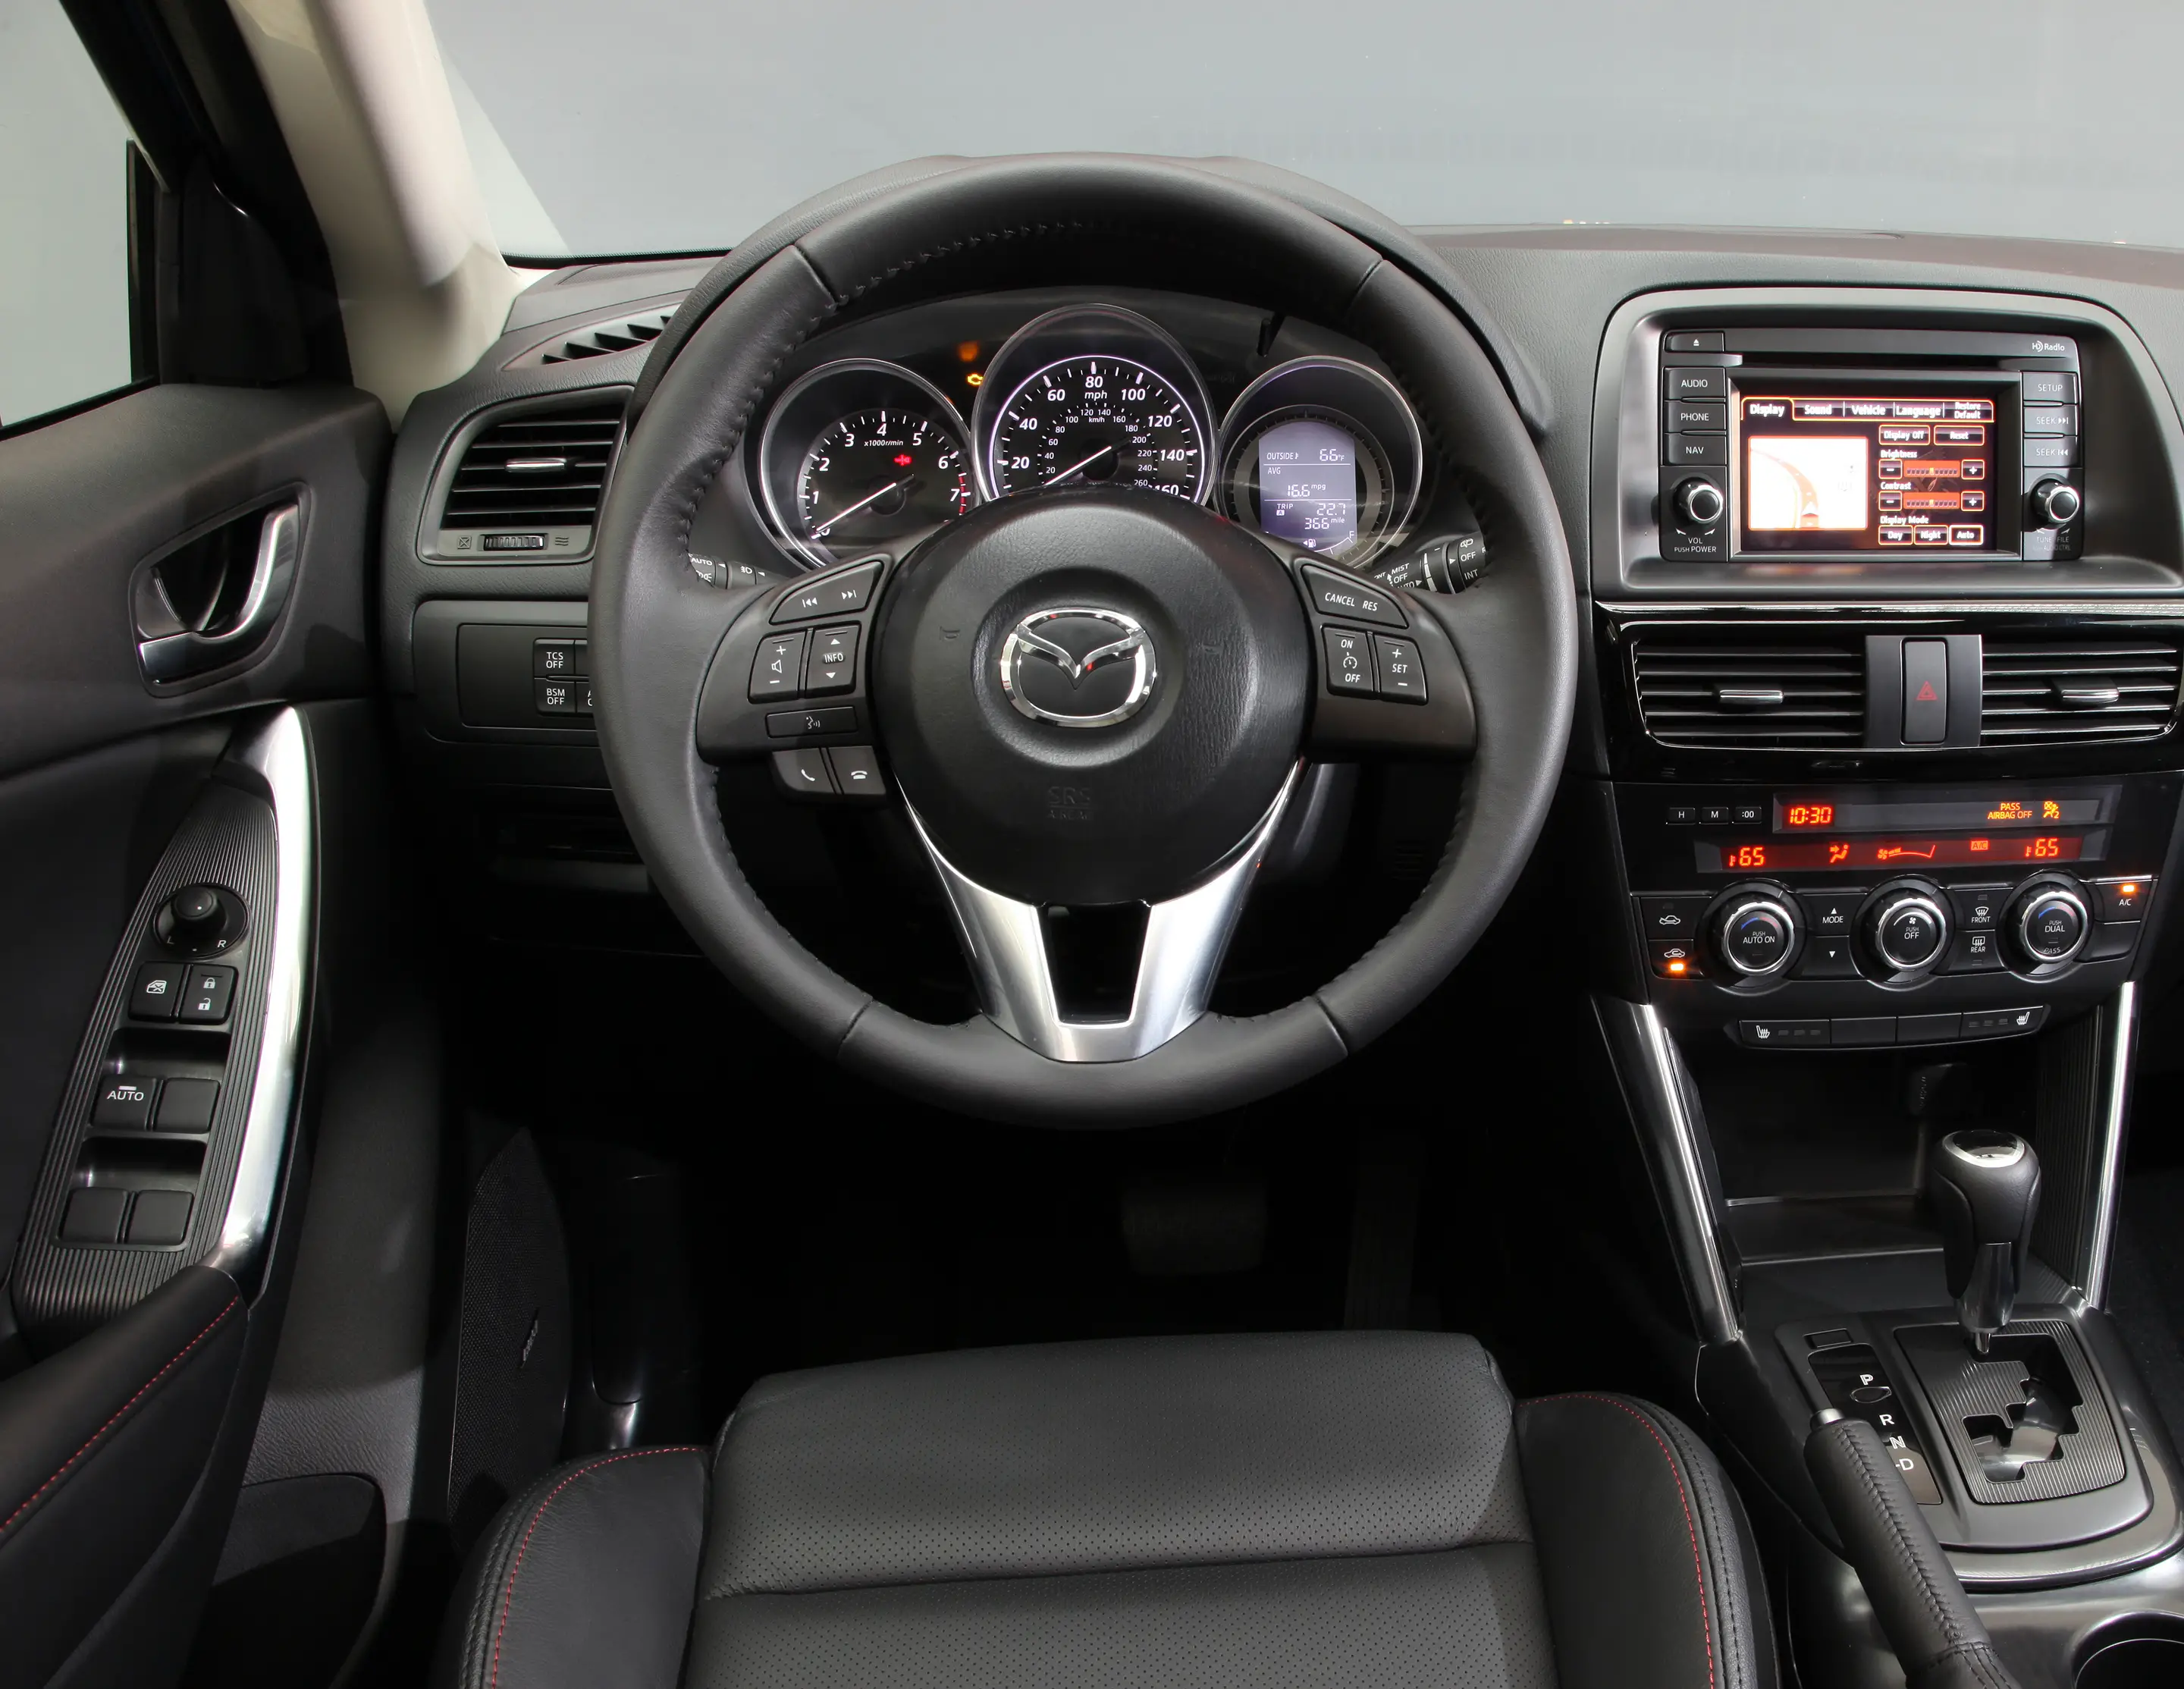 Мазда сх 5 своими руками. Mazda cx5 Interior. Mazda CX-5 2013. Mazda CX 5 салон. Мазда СХ-5 интерьер салона.